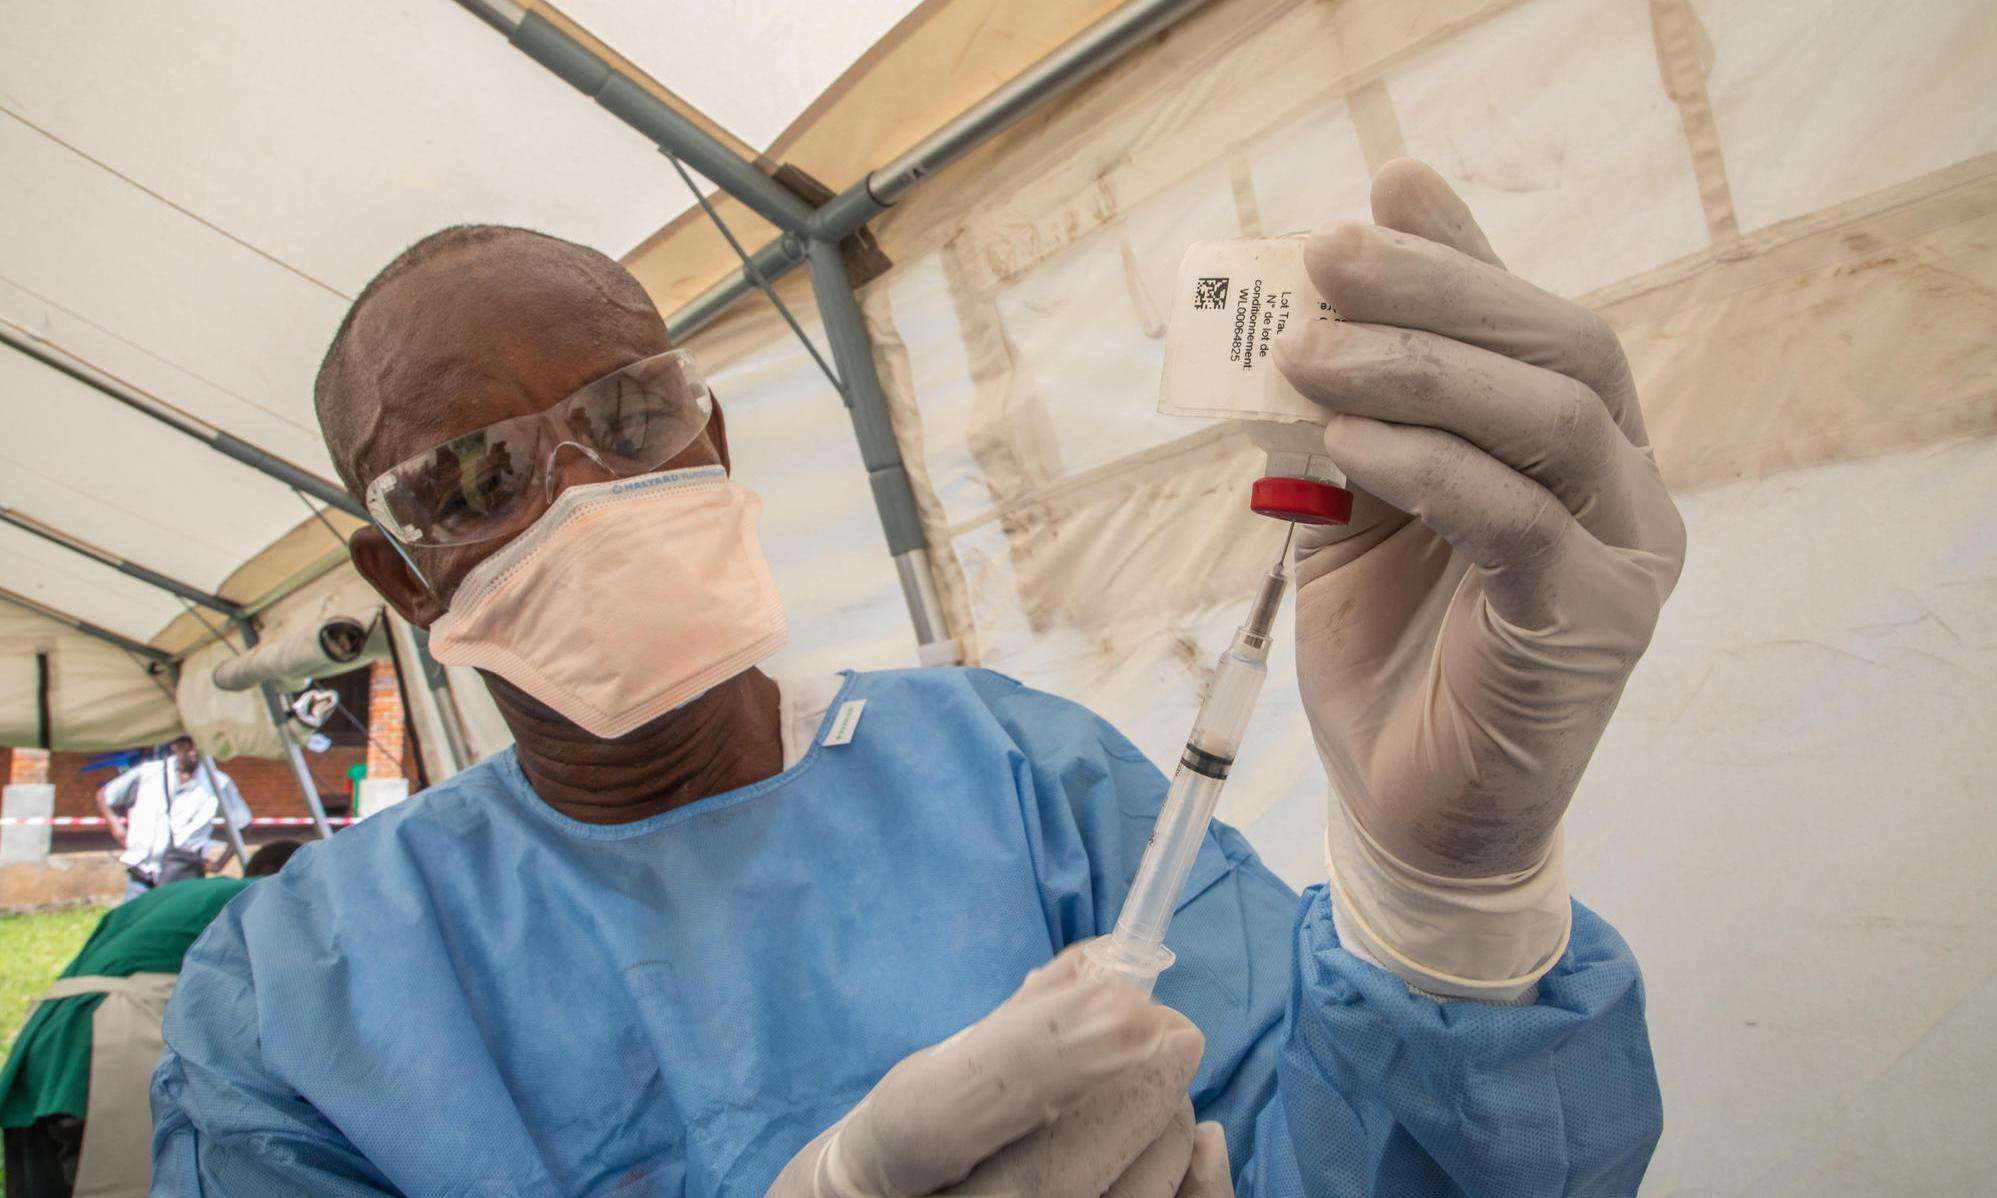 A nurse prepares an Ebola vaccine in Bikoro during the 2018-2020 Ebola epidemic in the Democratic Republic of Congo.